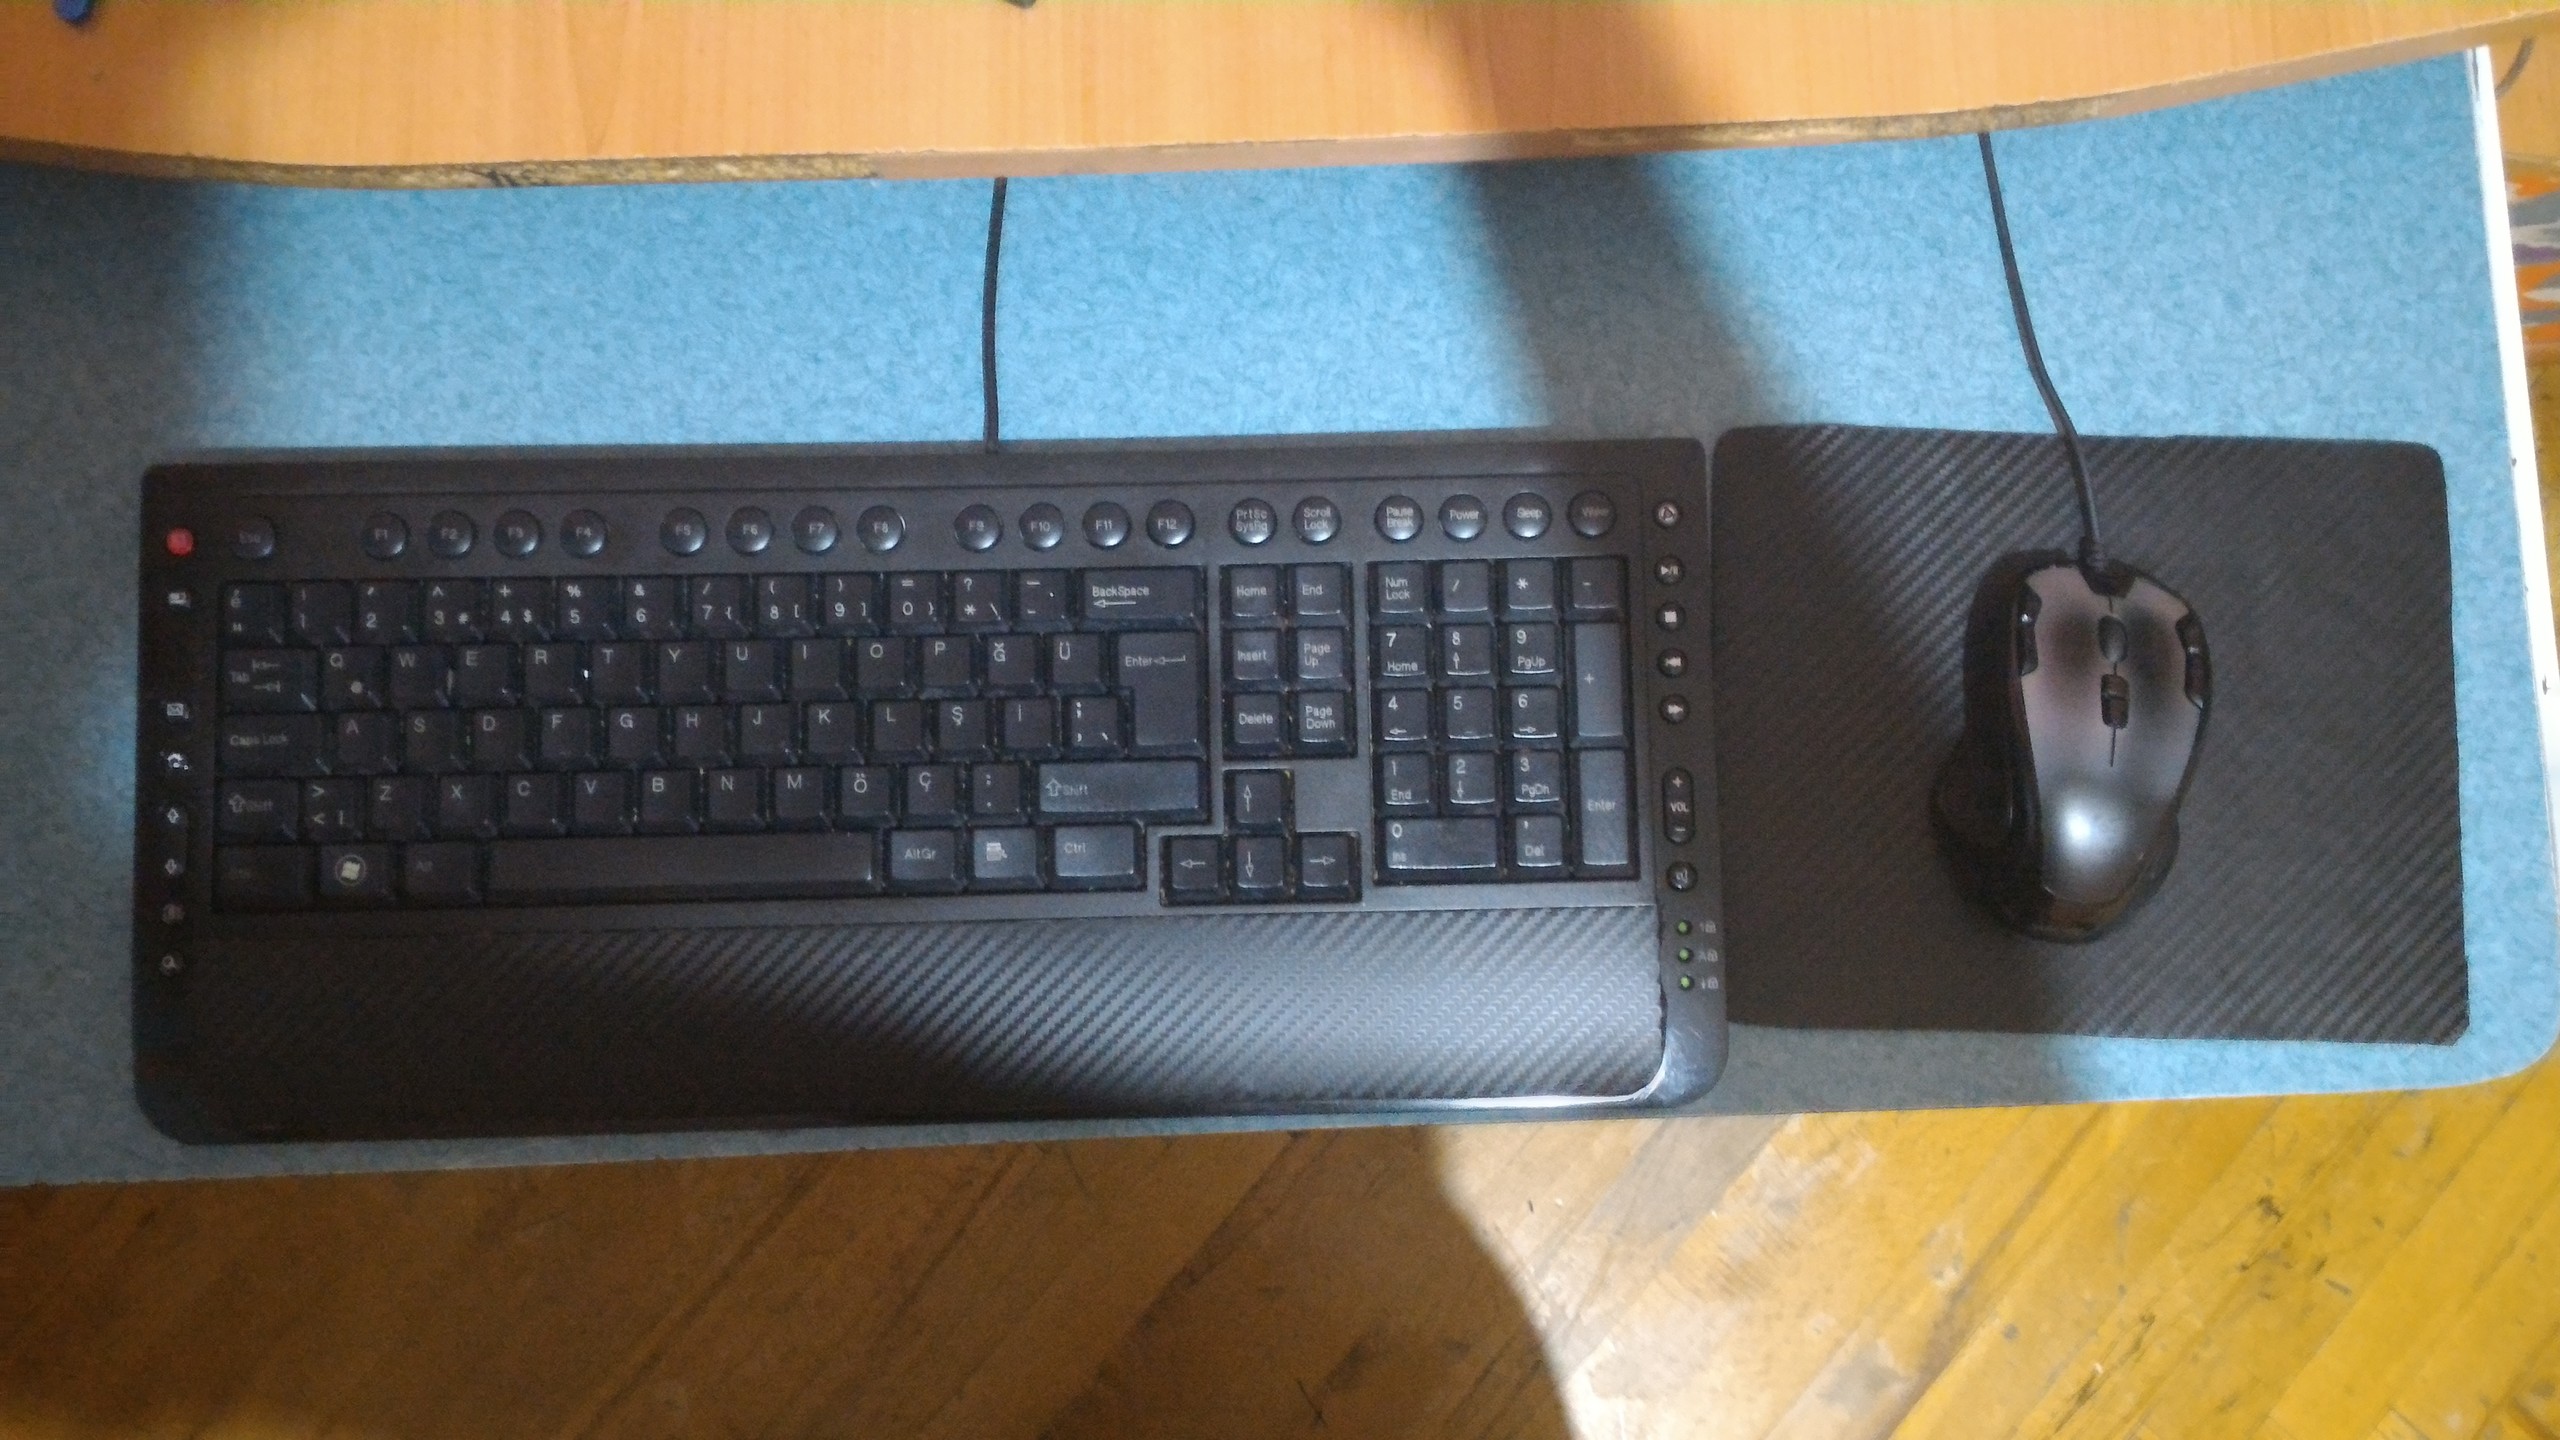  Klavye ve MousePad Karbon Fiber Kapladım